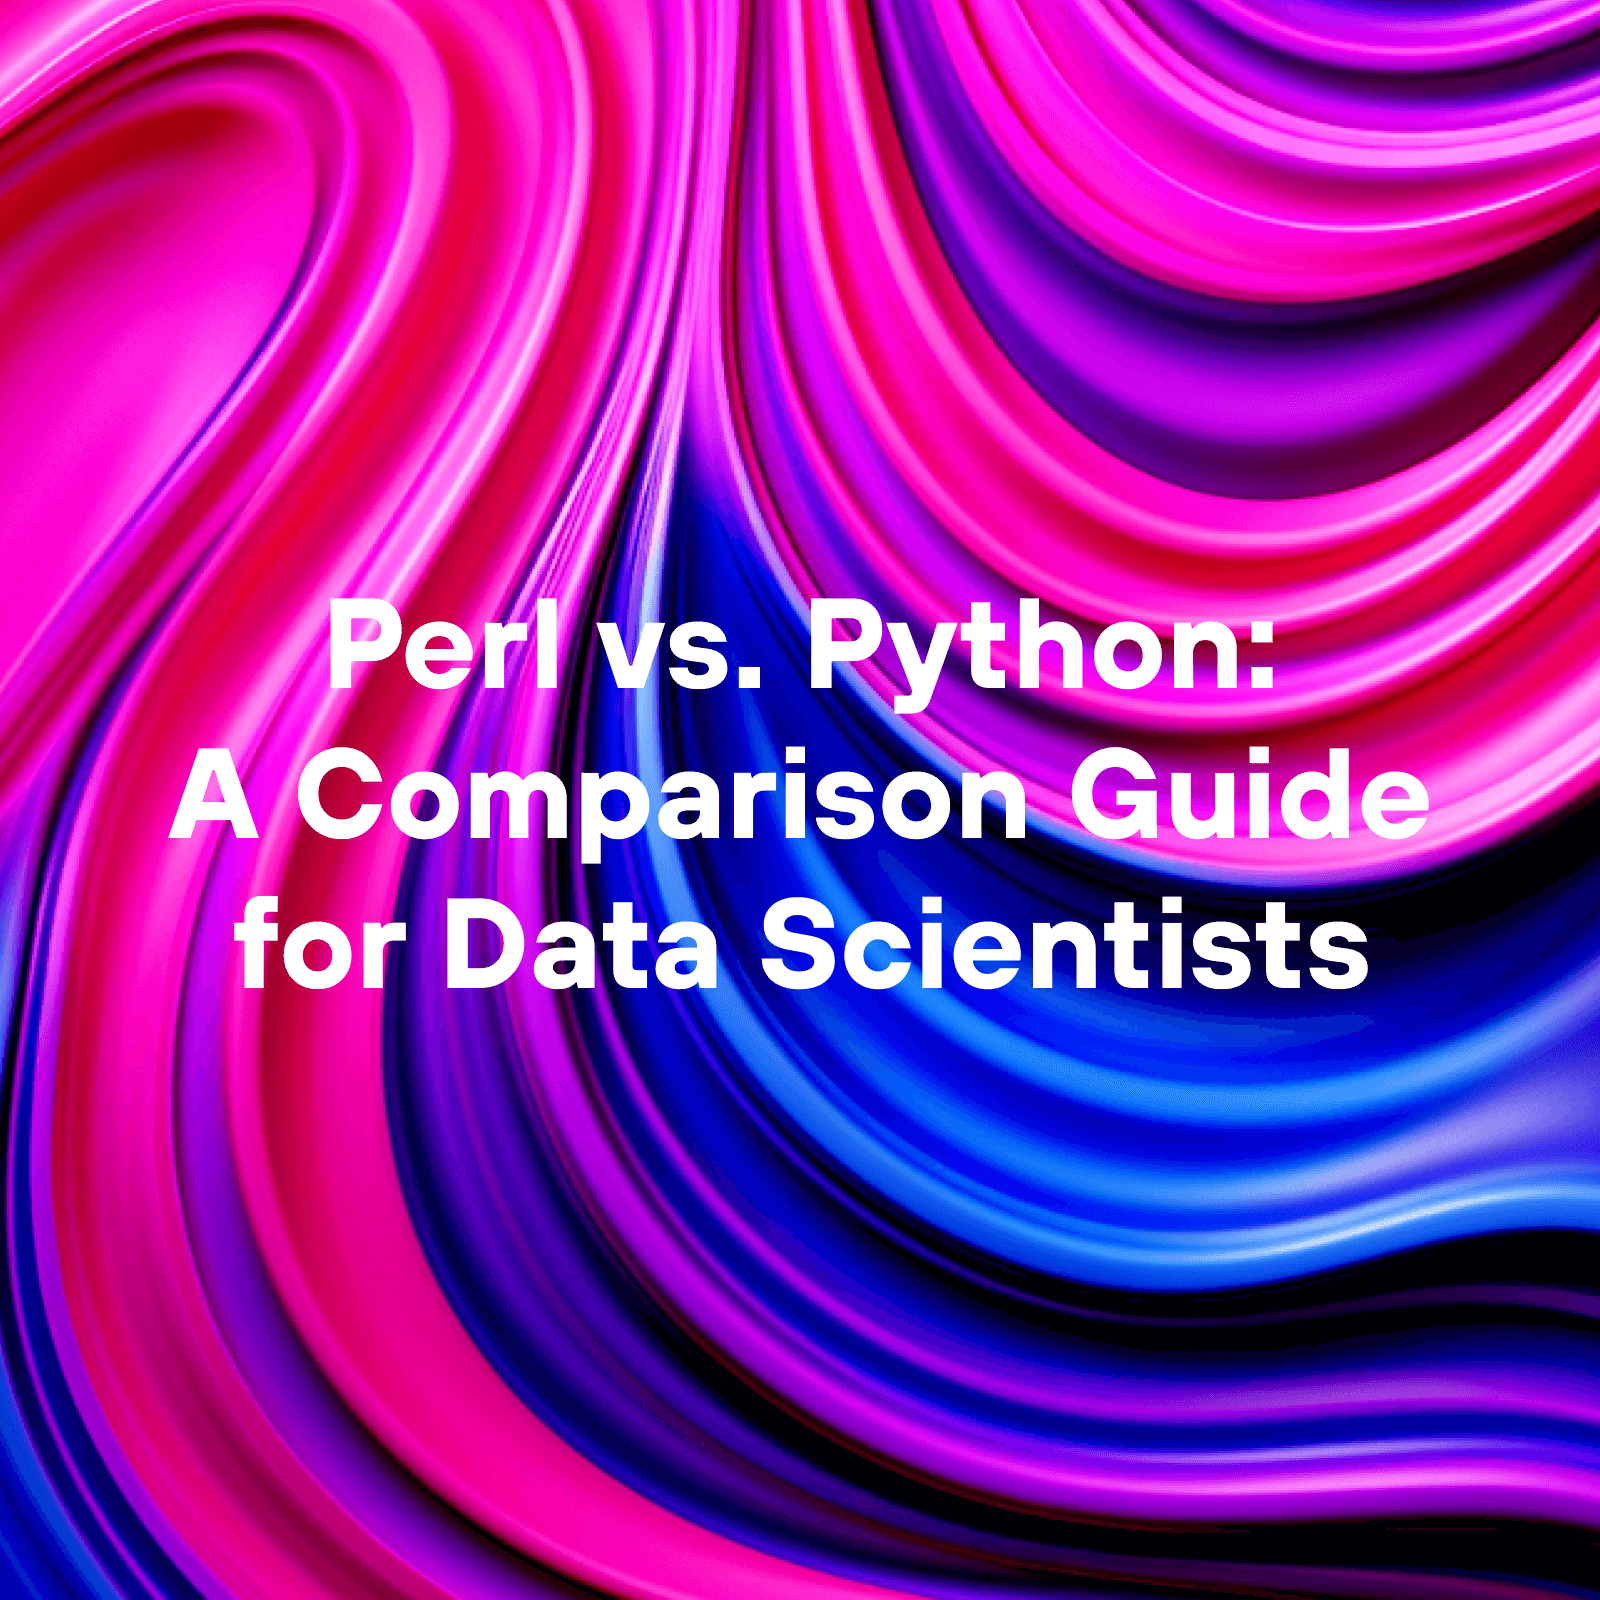 Perl vs. Python: A Comparison Guide for Data Scientists